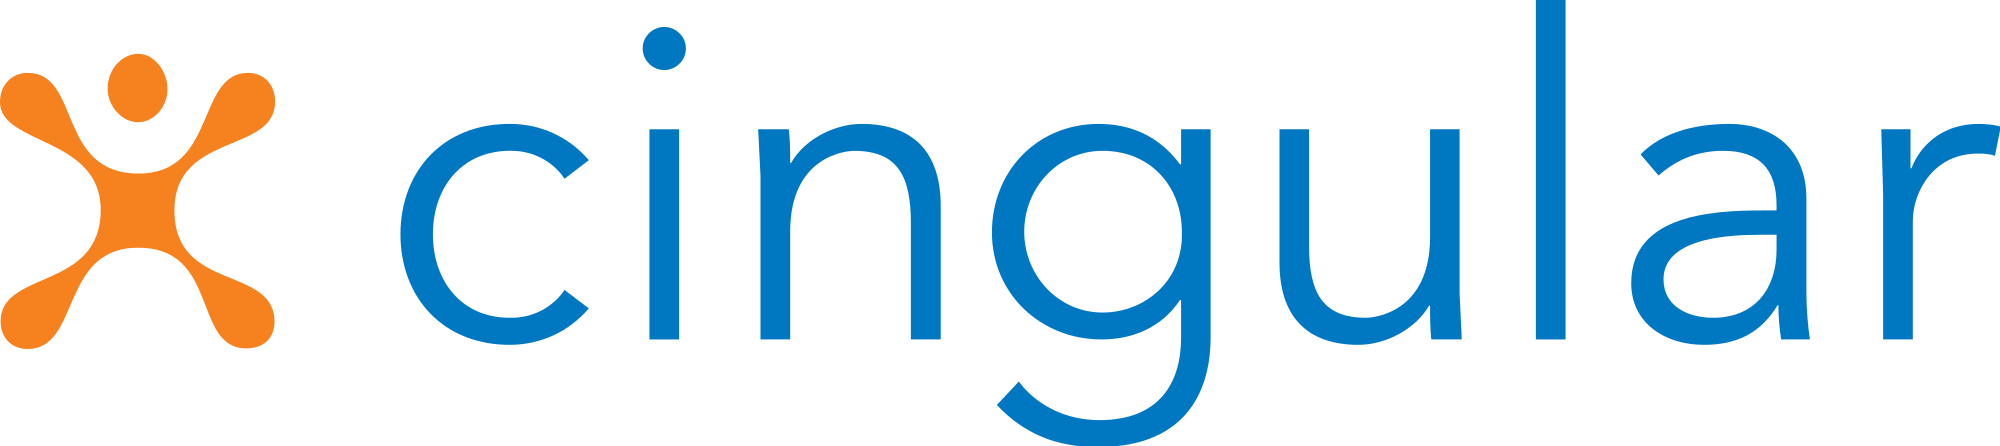 Cingular Brand Logo